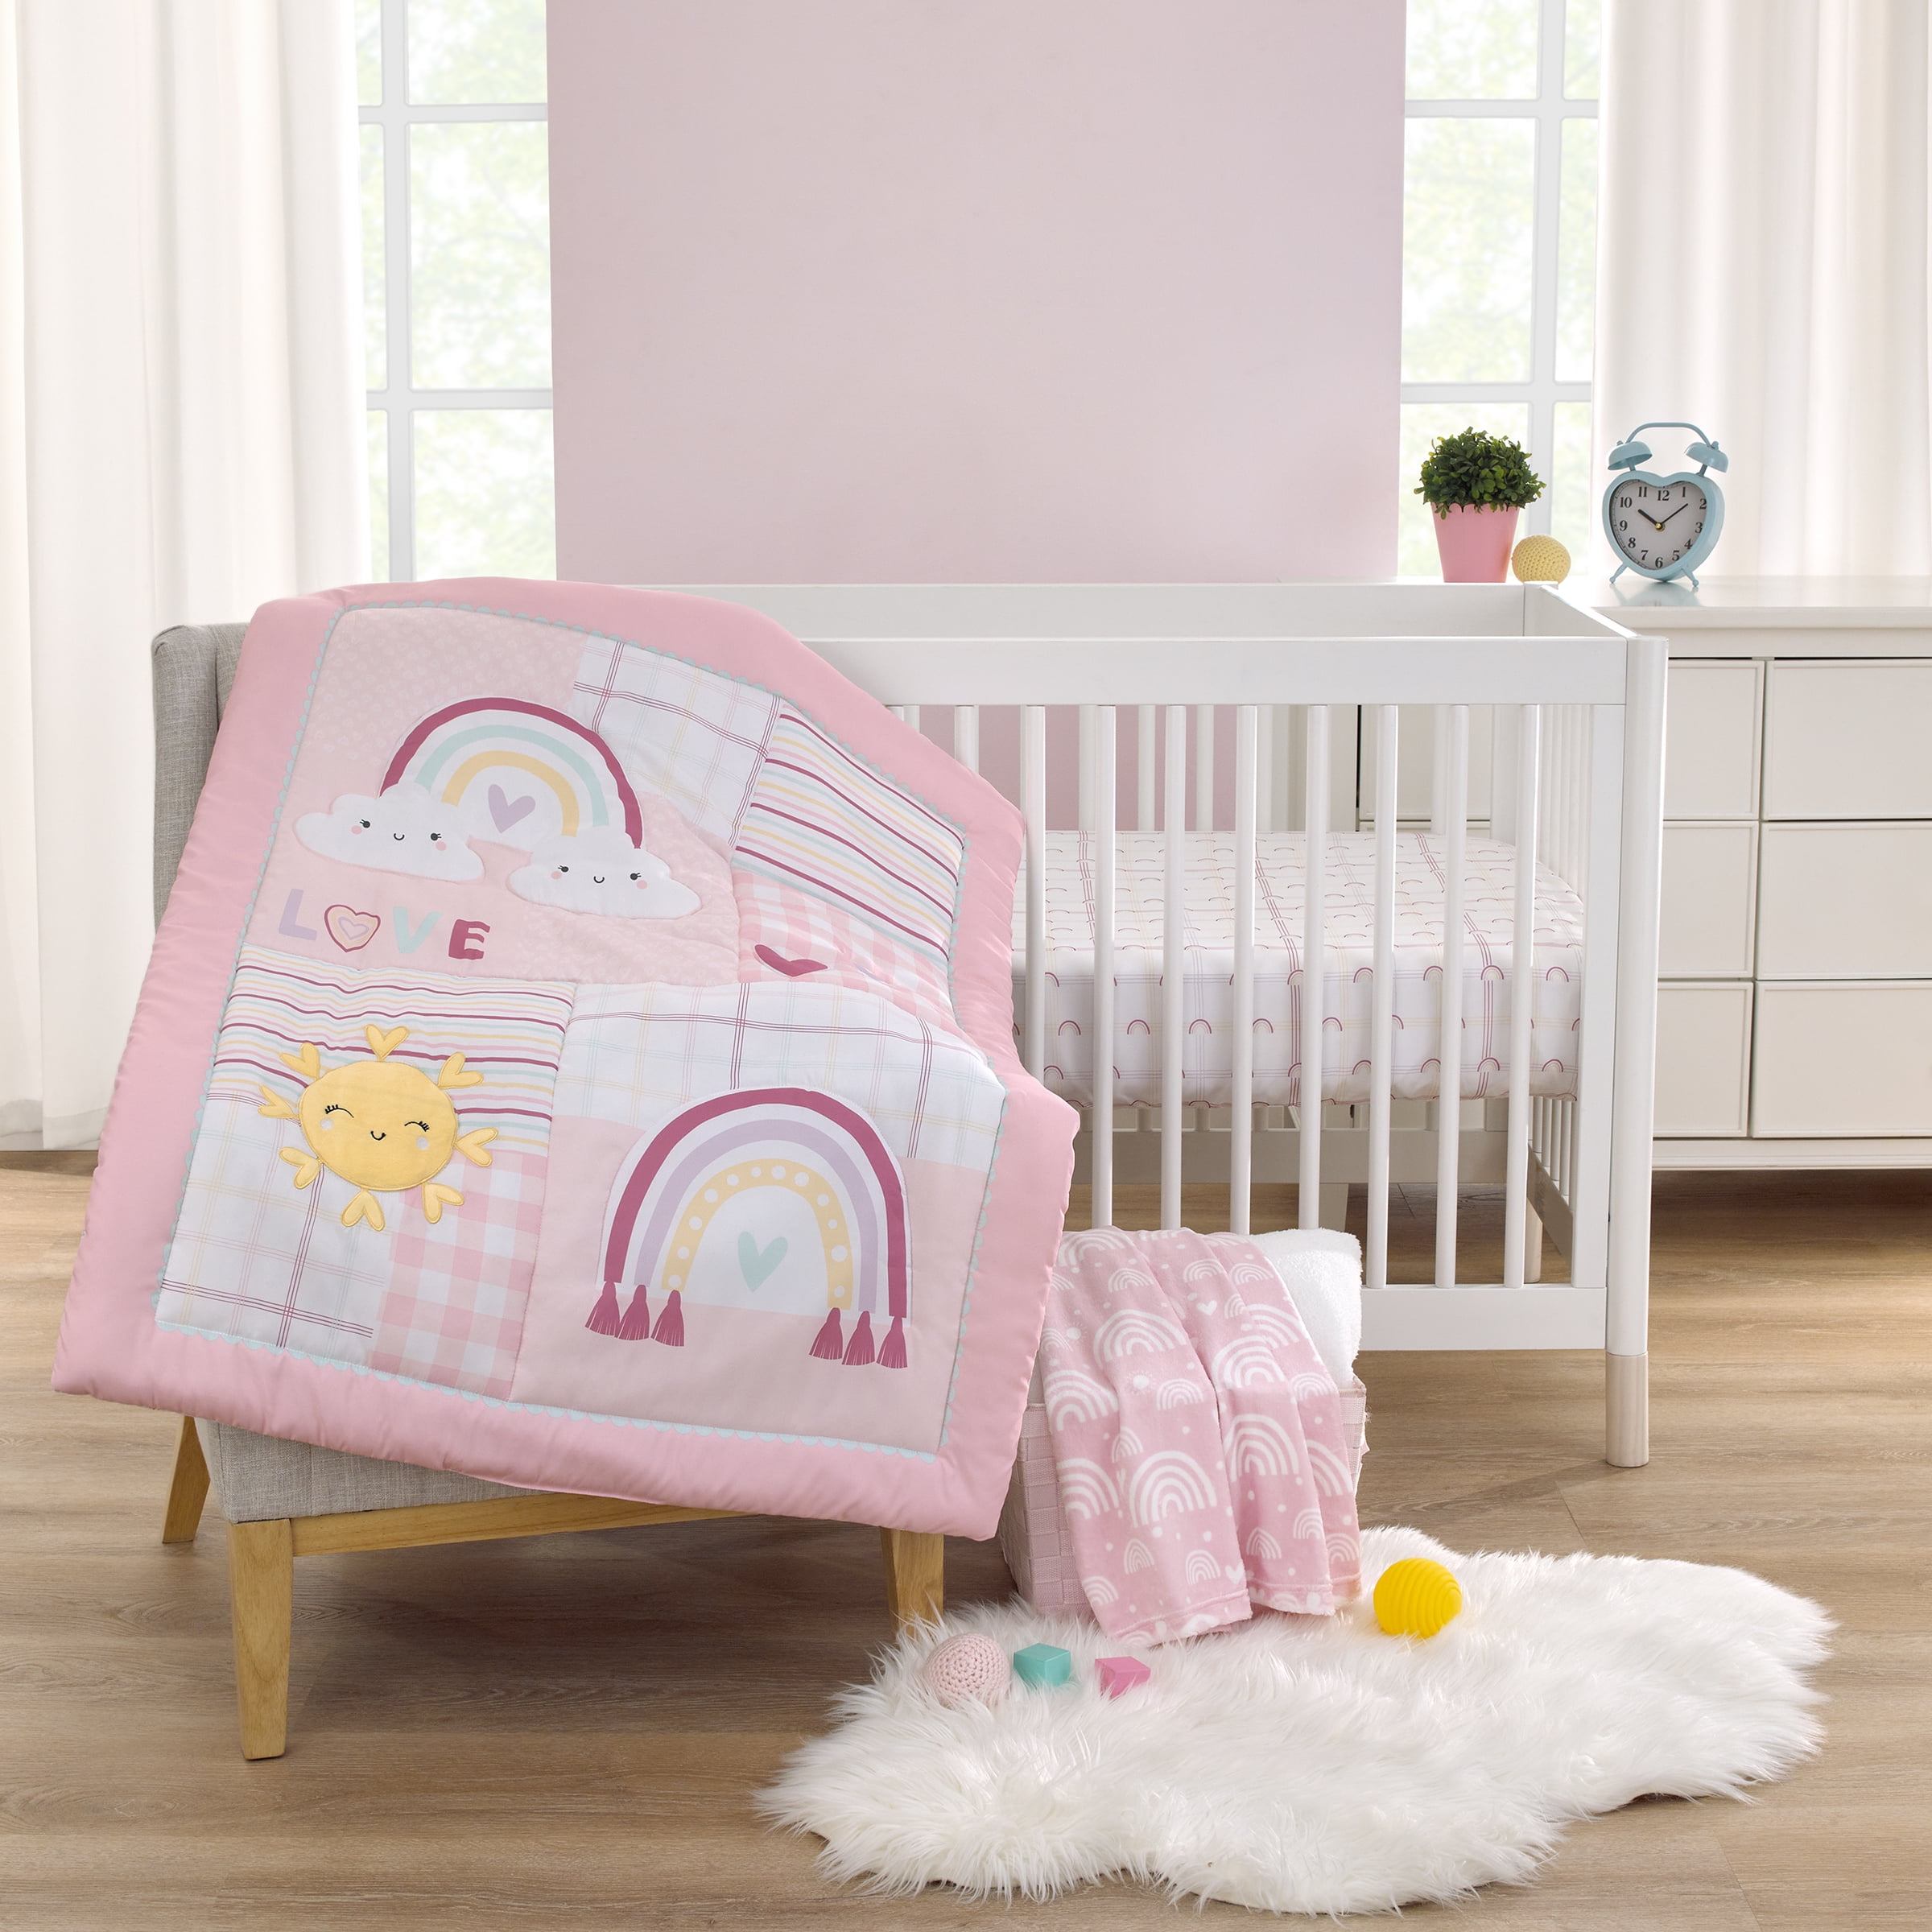 Baby Crib Bedding Decoration,White Crib Toys Hanging Arm Bracket Holder for Baby Boys and Girls 